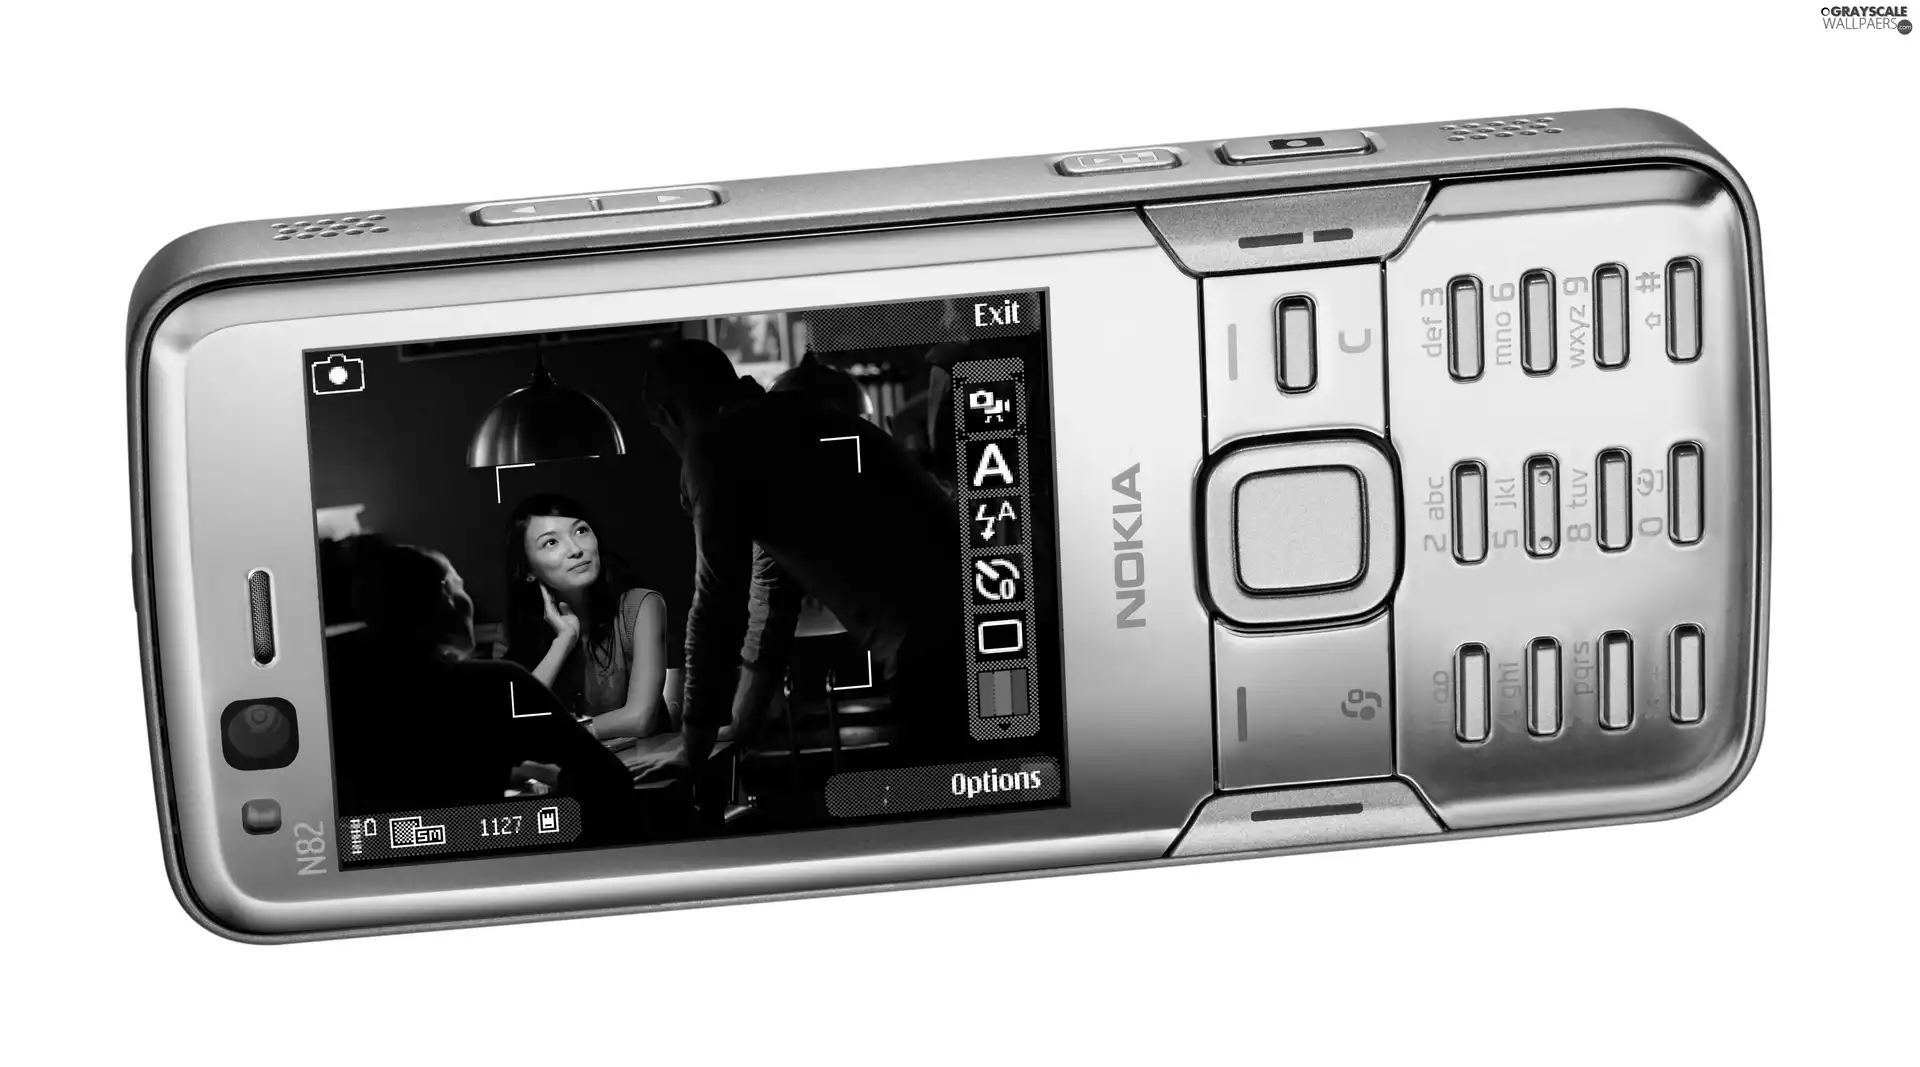 Nokia N82, Camera